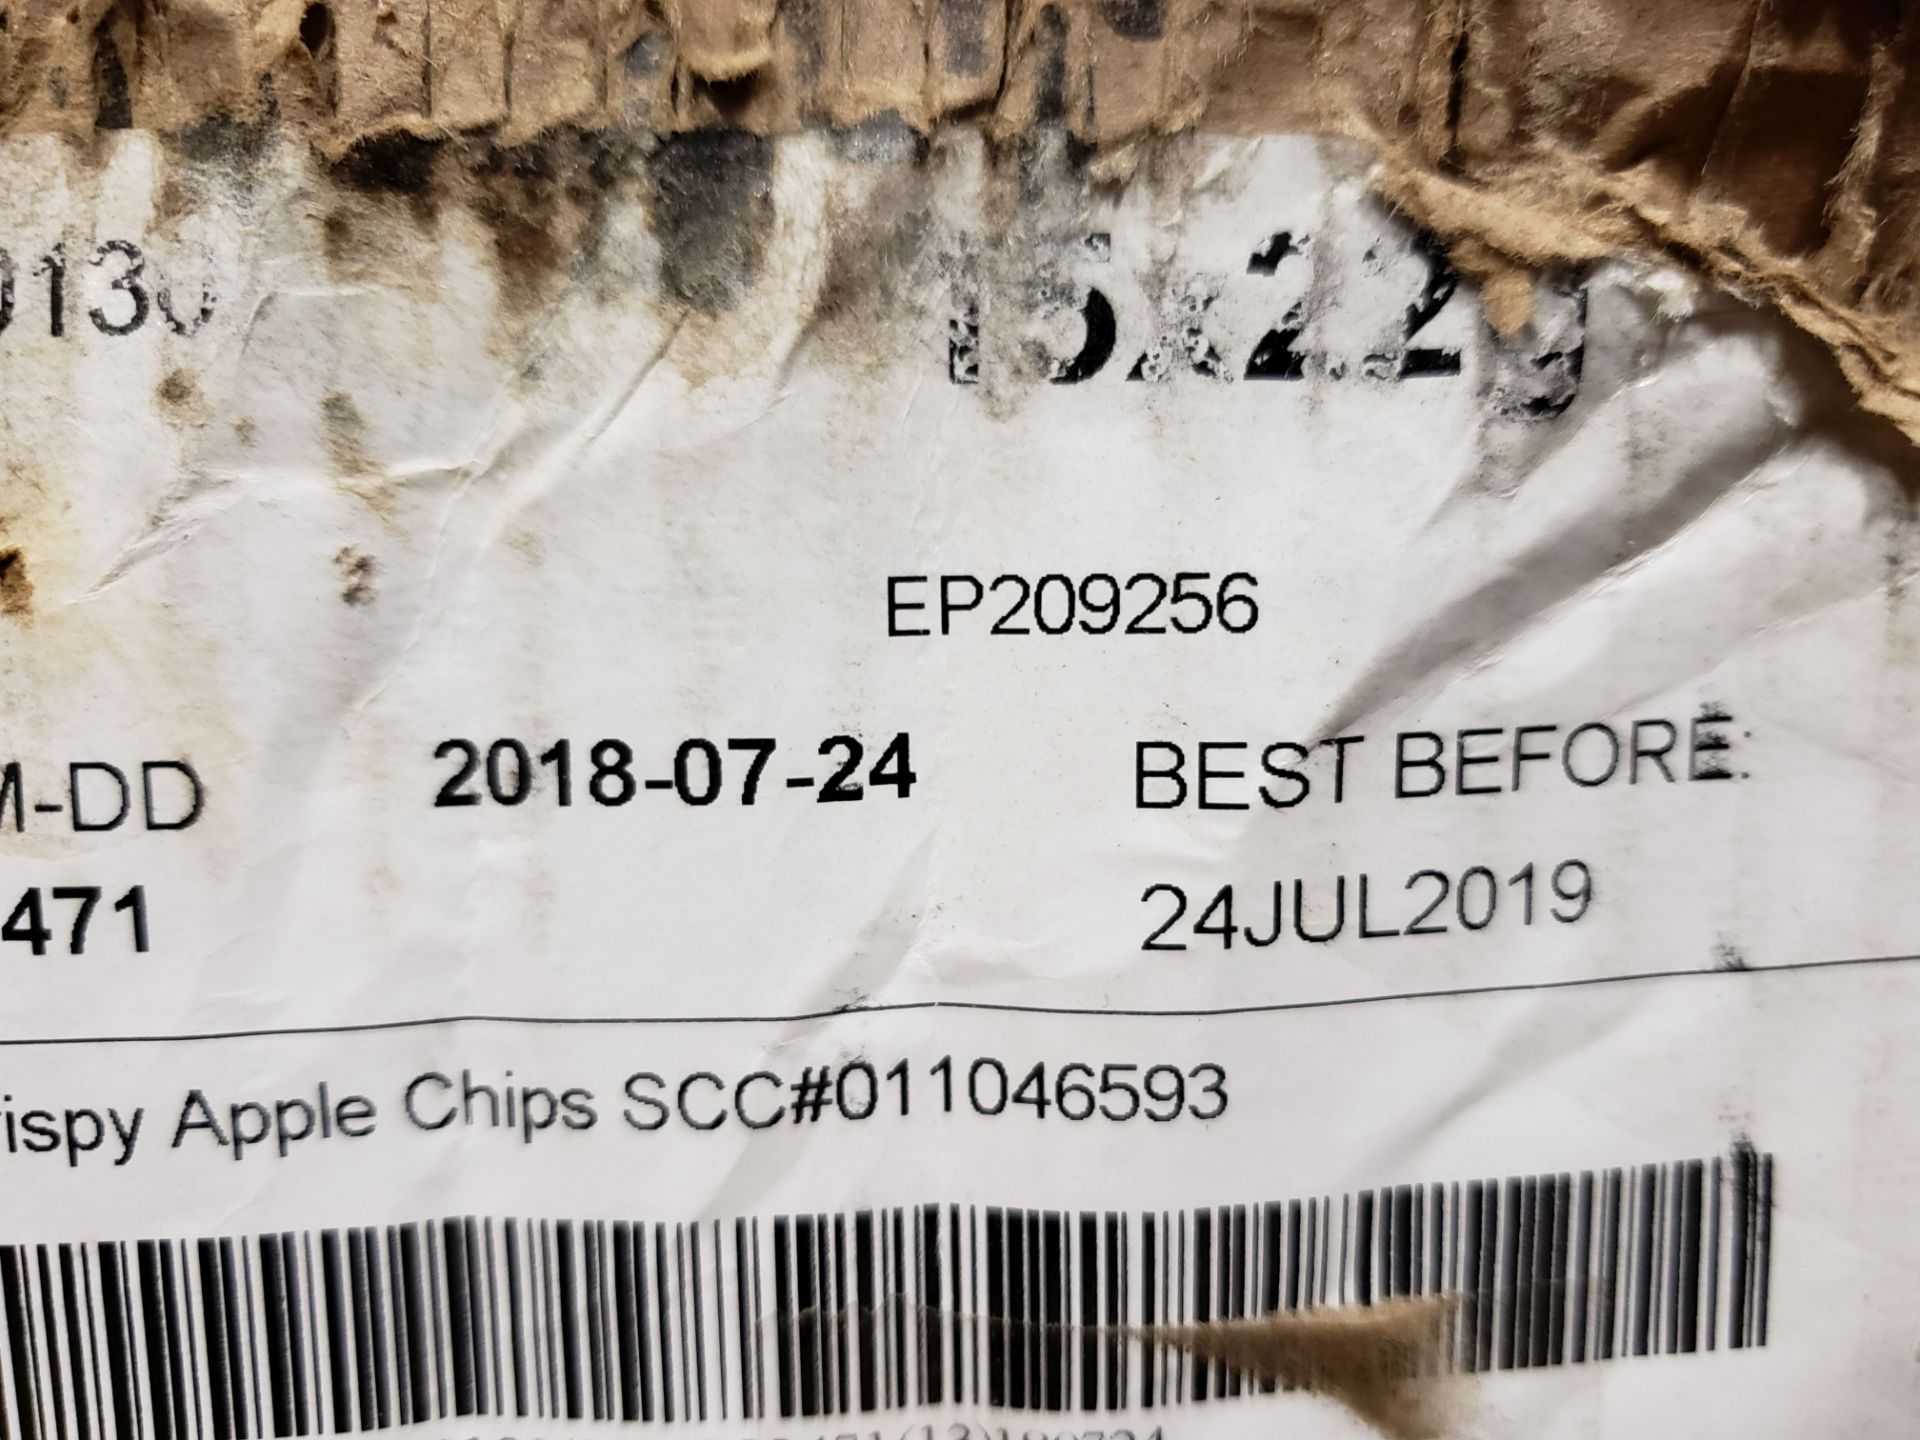 Martin's Crispy Apple Chips - 2 x 15 x 22 gr Bags - Image 2 of 2